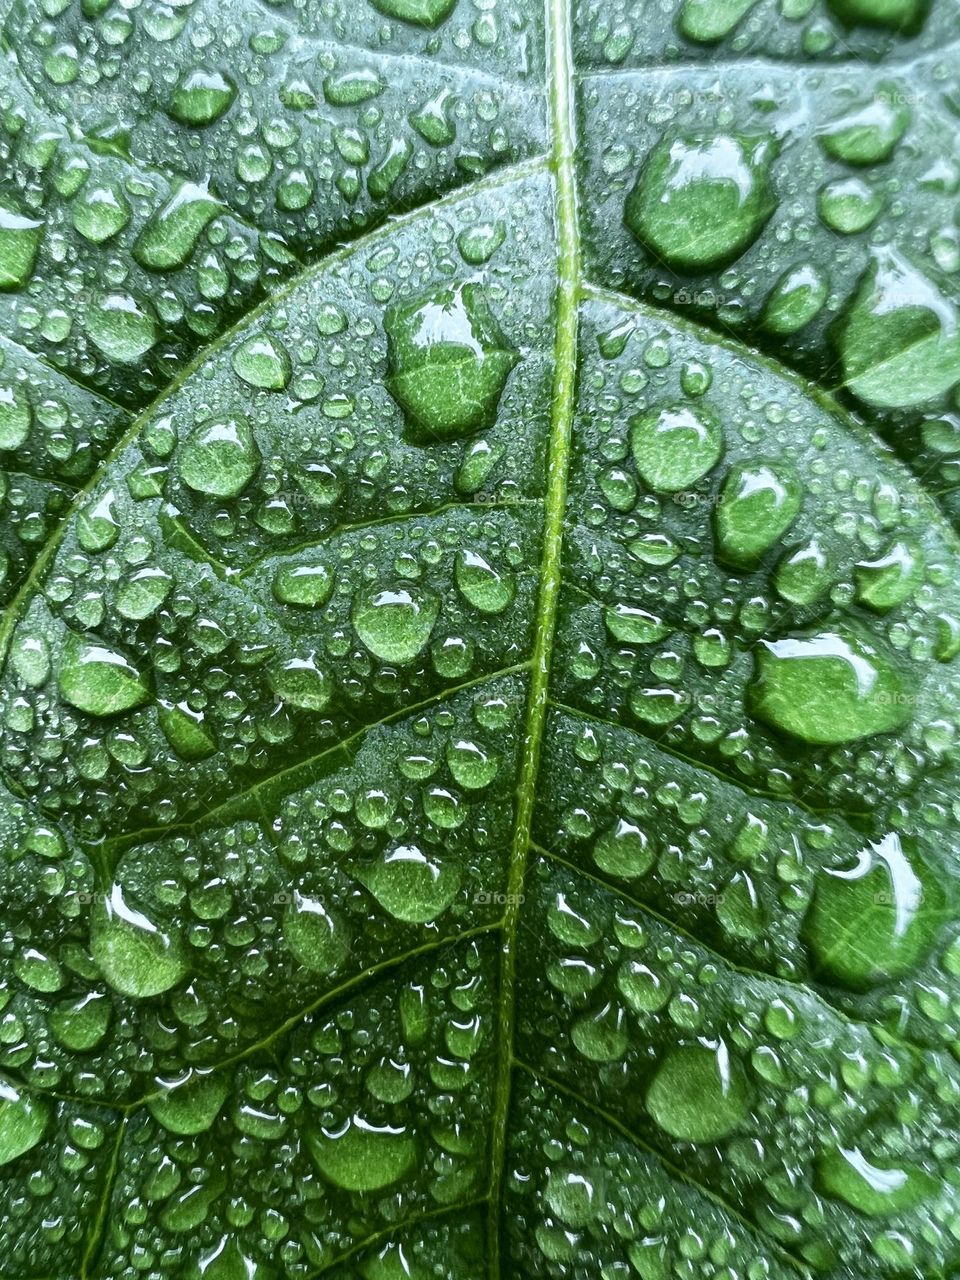 Macro of raindrops on the green leaf in full framed.